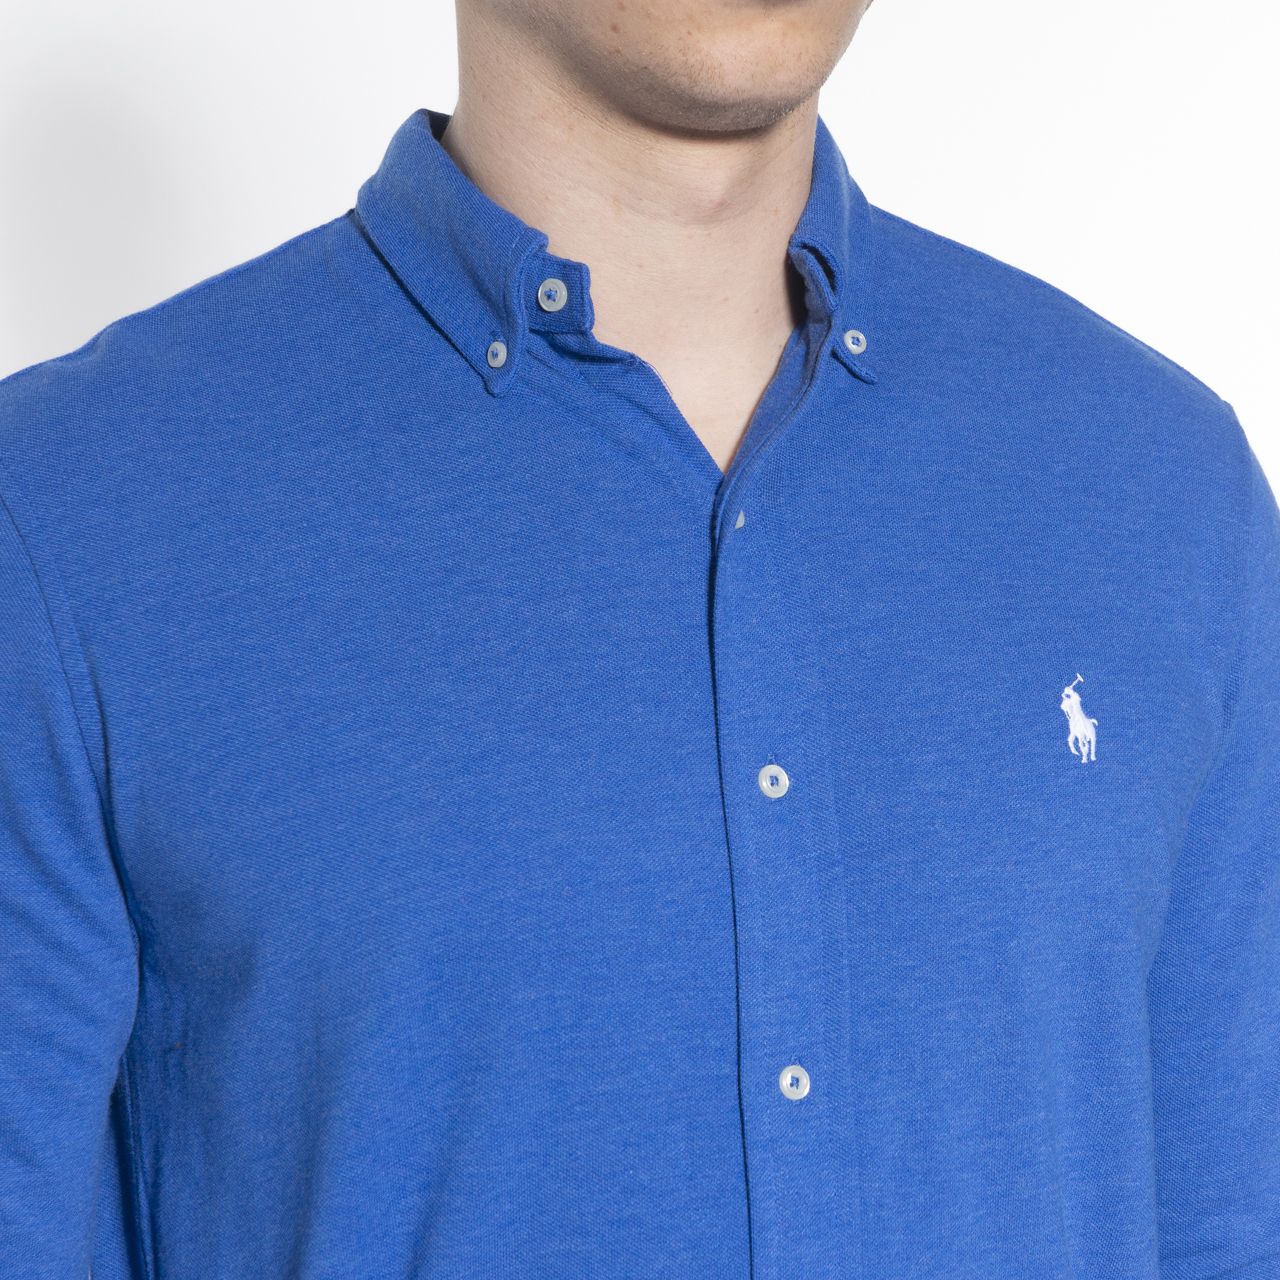 Polo Ralph Lauren Casual overhemd LM  Blauw 058445-005-L